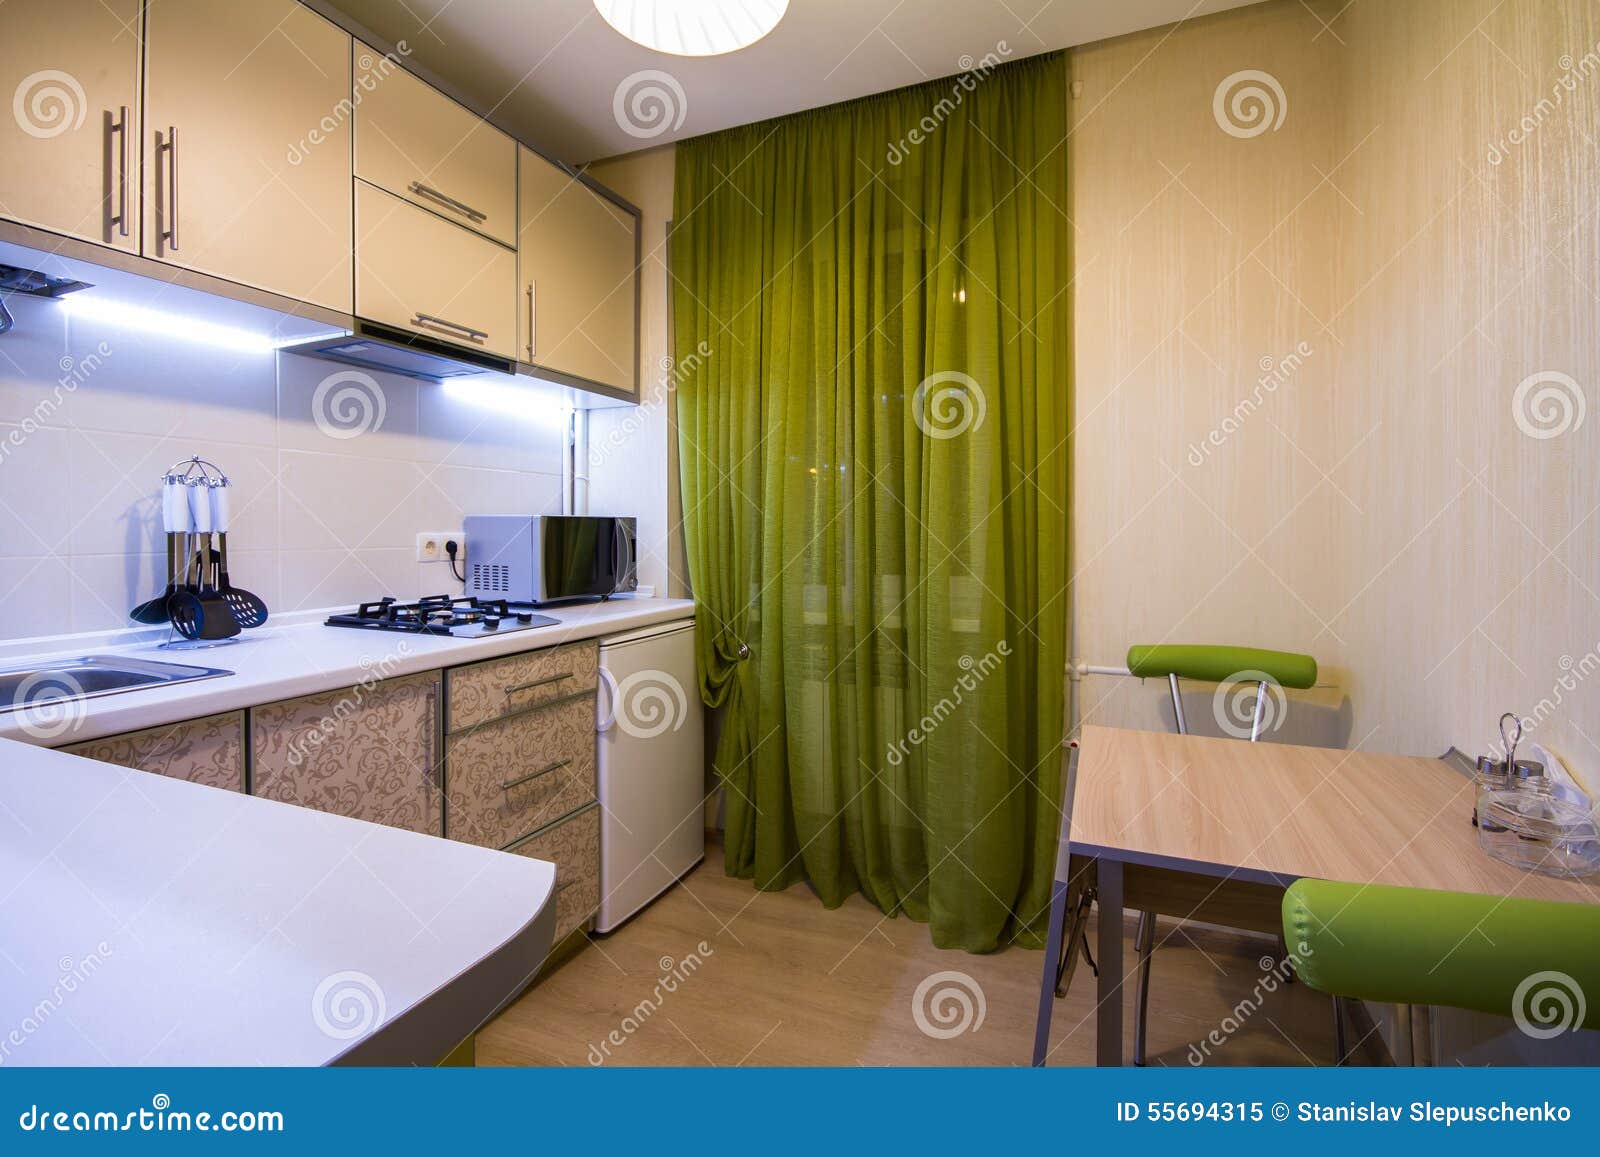 suggest Terrible Deviate Σύγχρονη μικρή κουζίνα με τις πράσινες κουρτίνες Στοκ Εικόνα - εικόνα από  lifestyle: 55694315